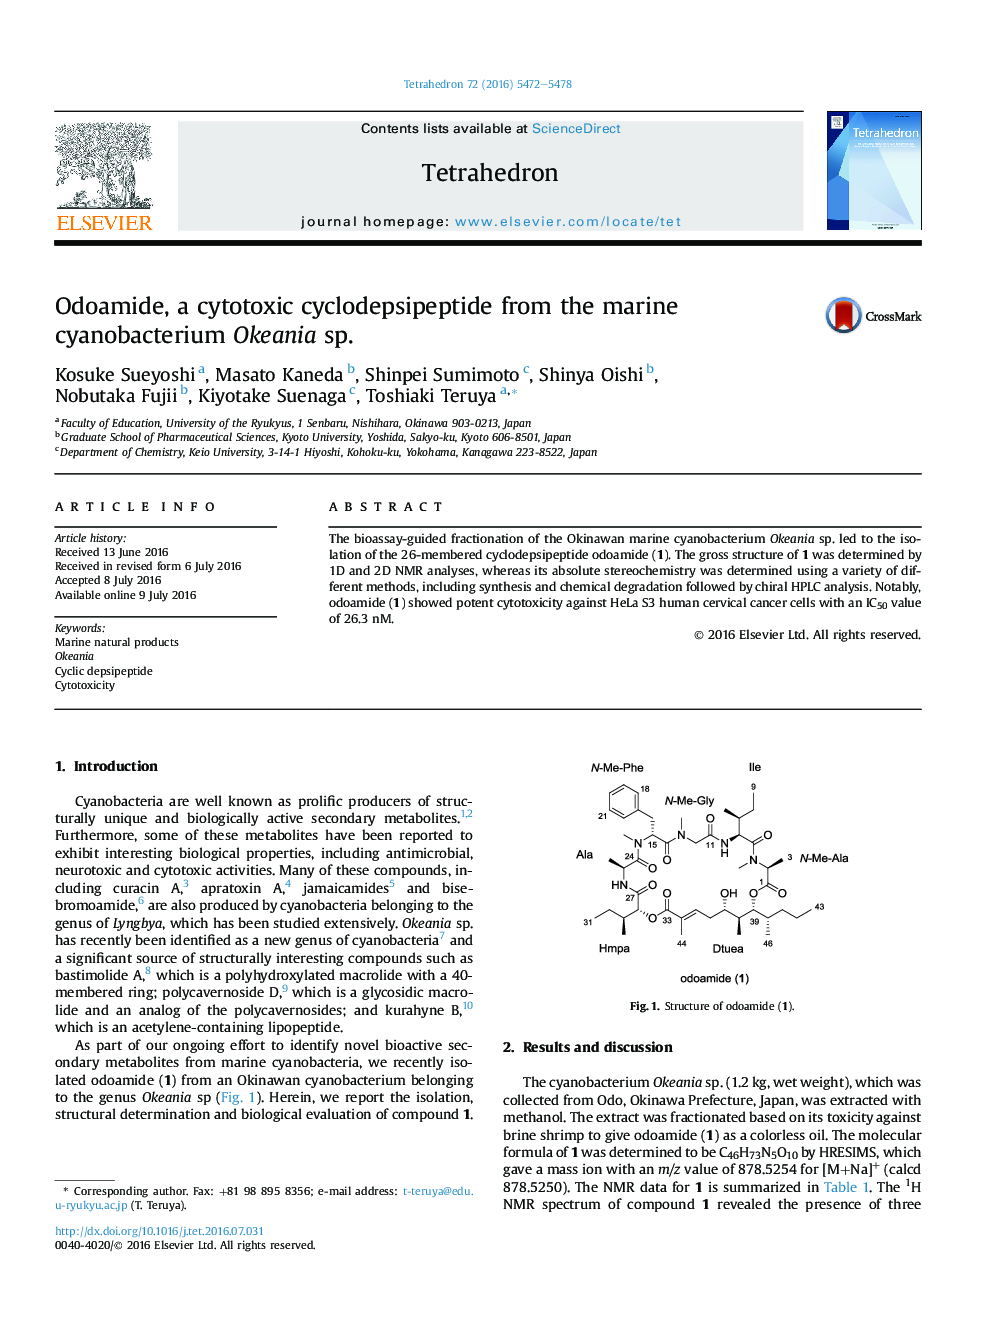 Odoamide, a cytotoxic cyclodepsipeptide from the marine cyanobacterium Okeania sp.